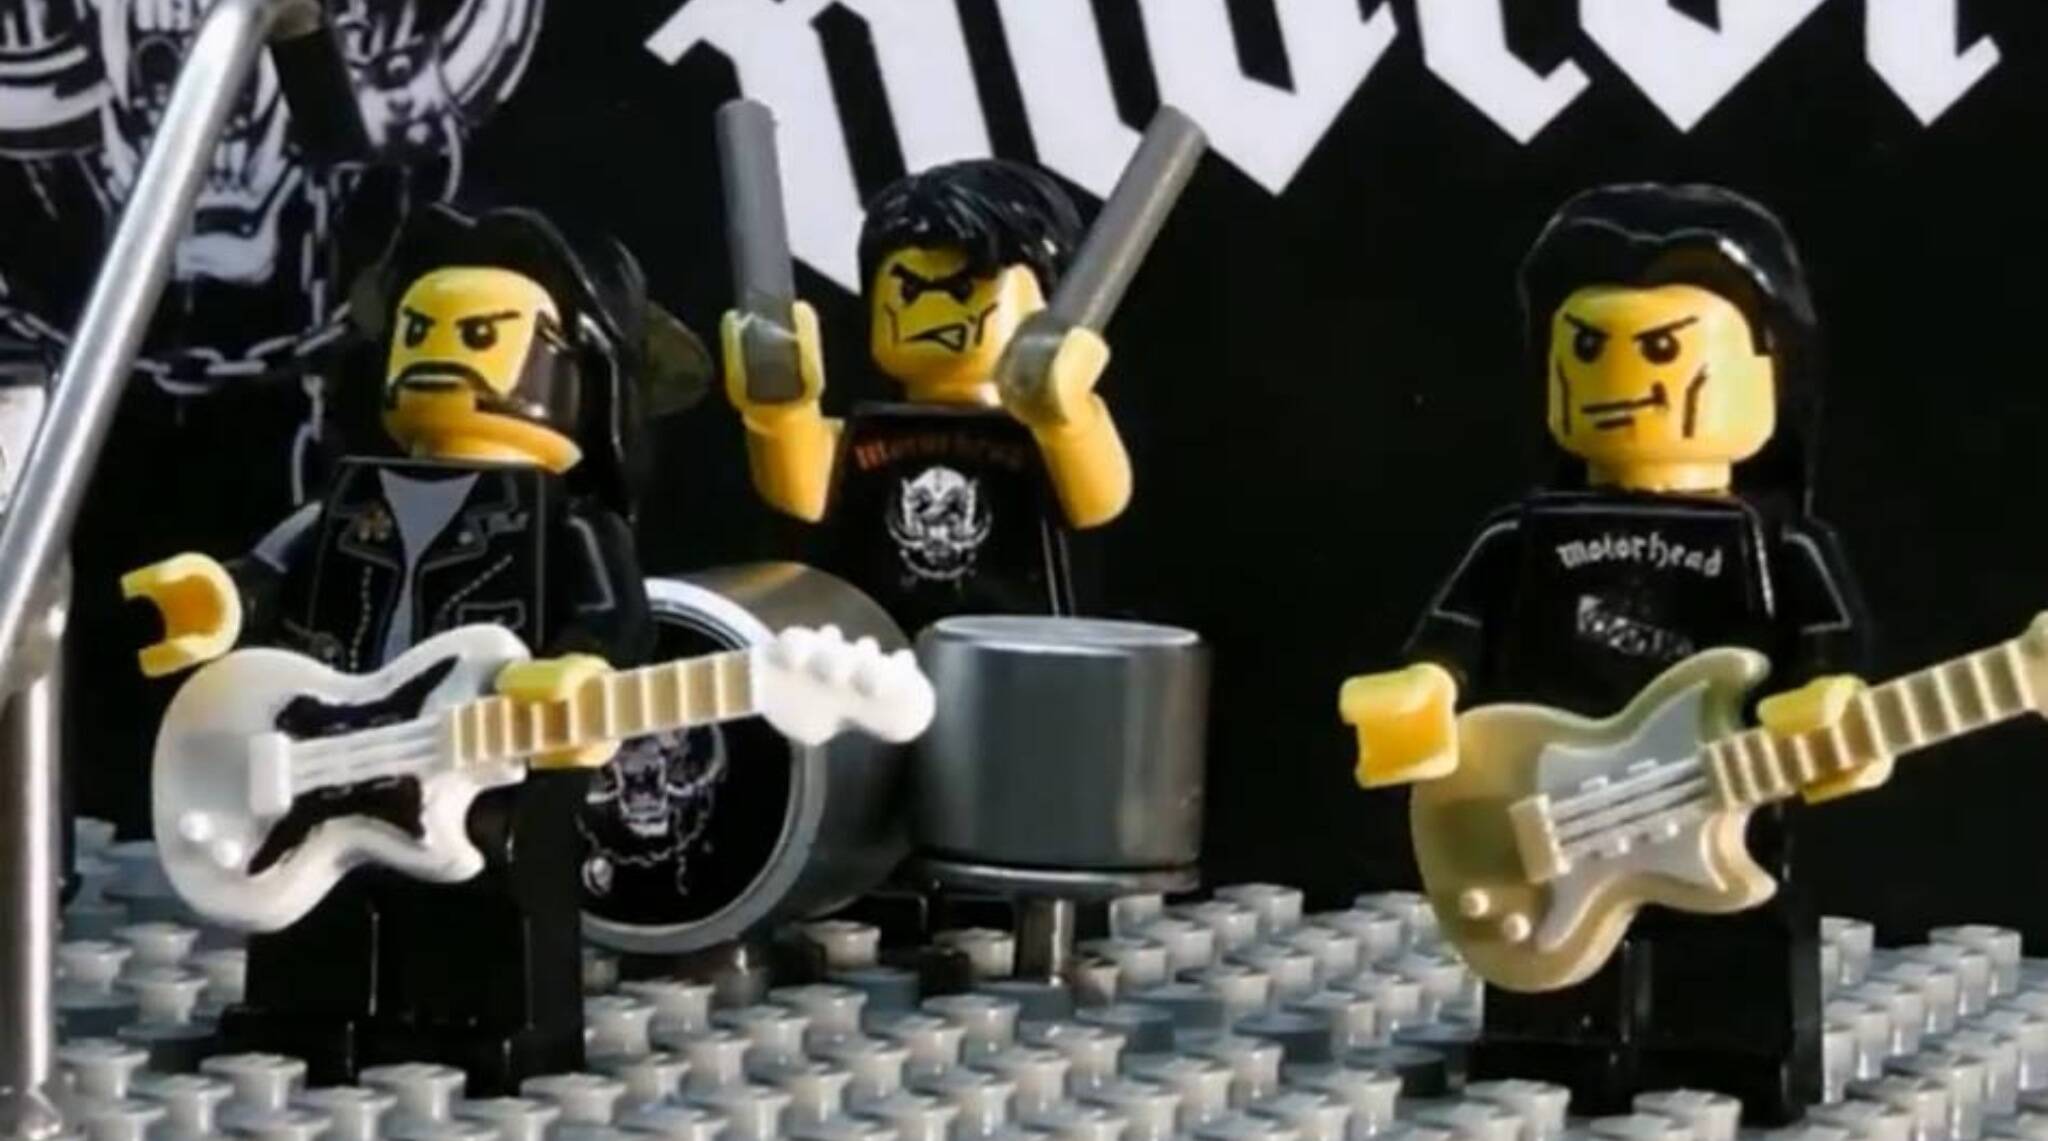 MUSICIANS LEGO